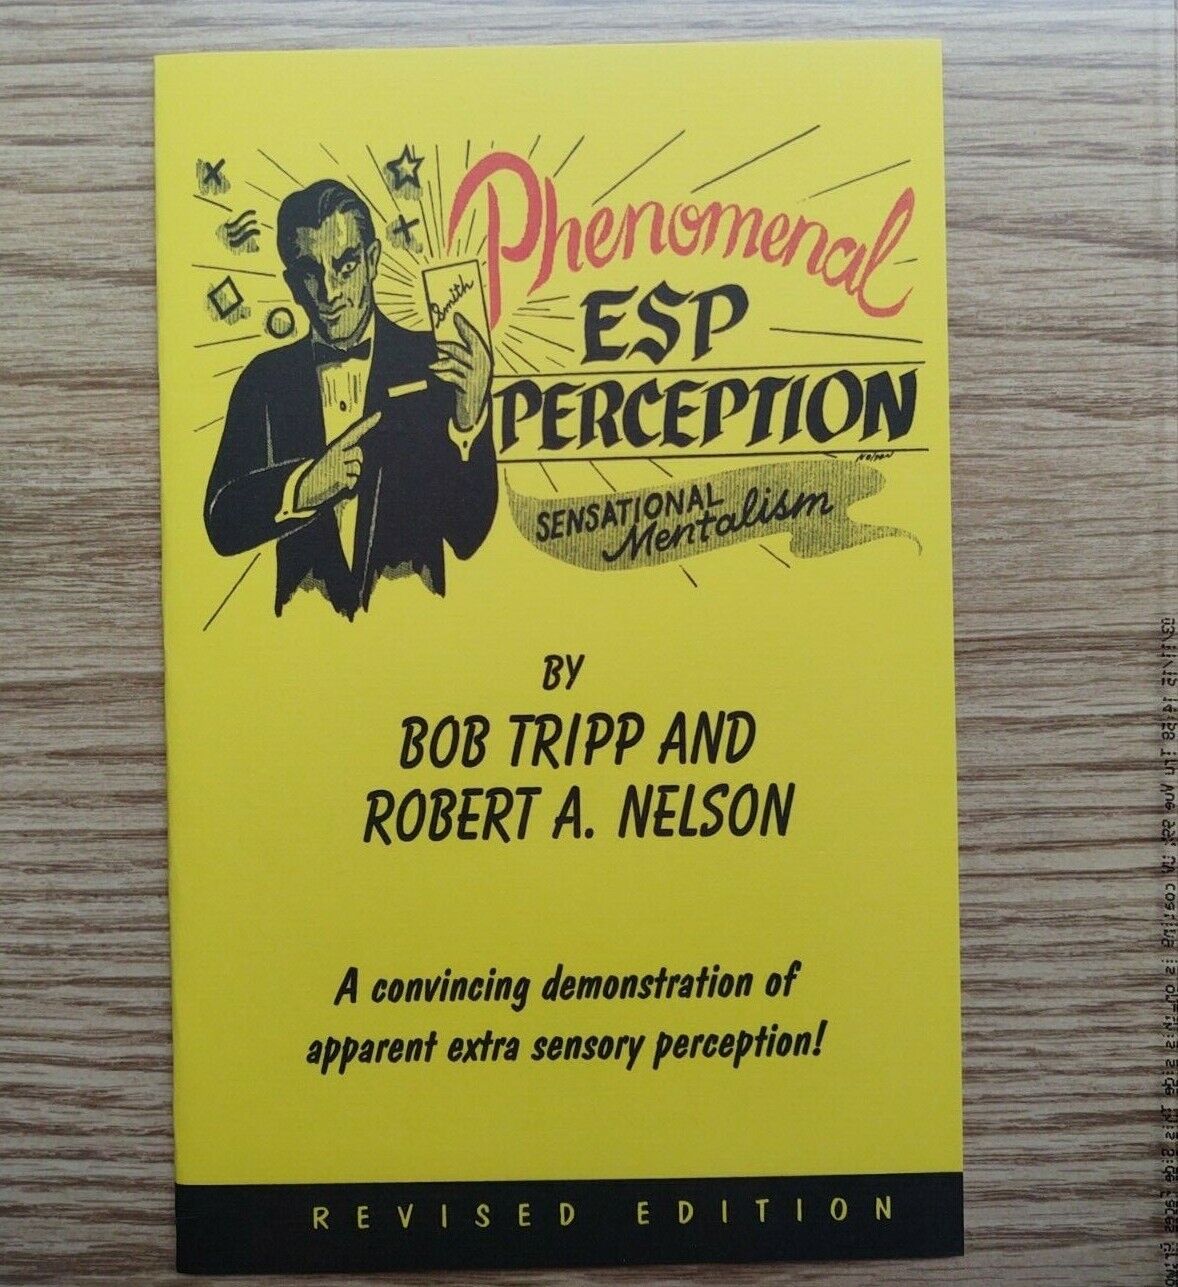 Phenomenal ESP Perception by Bob Tripp and Robert A. Nelson